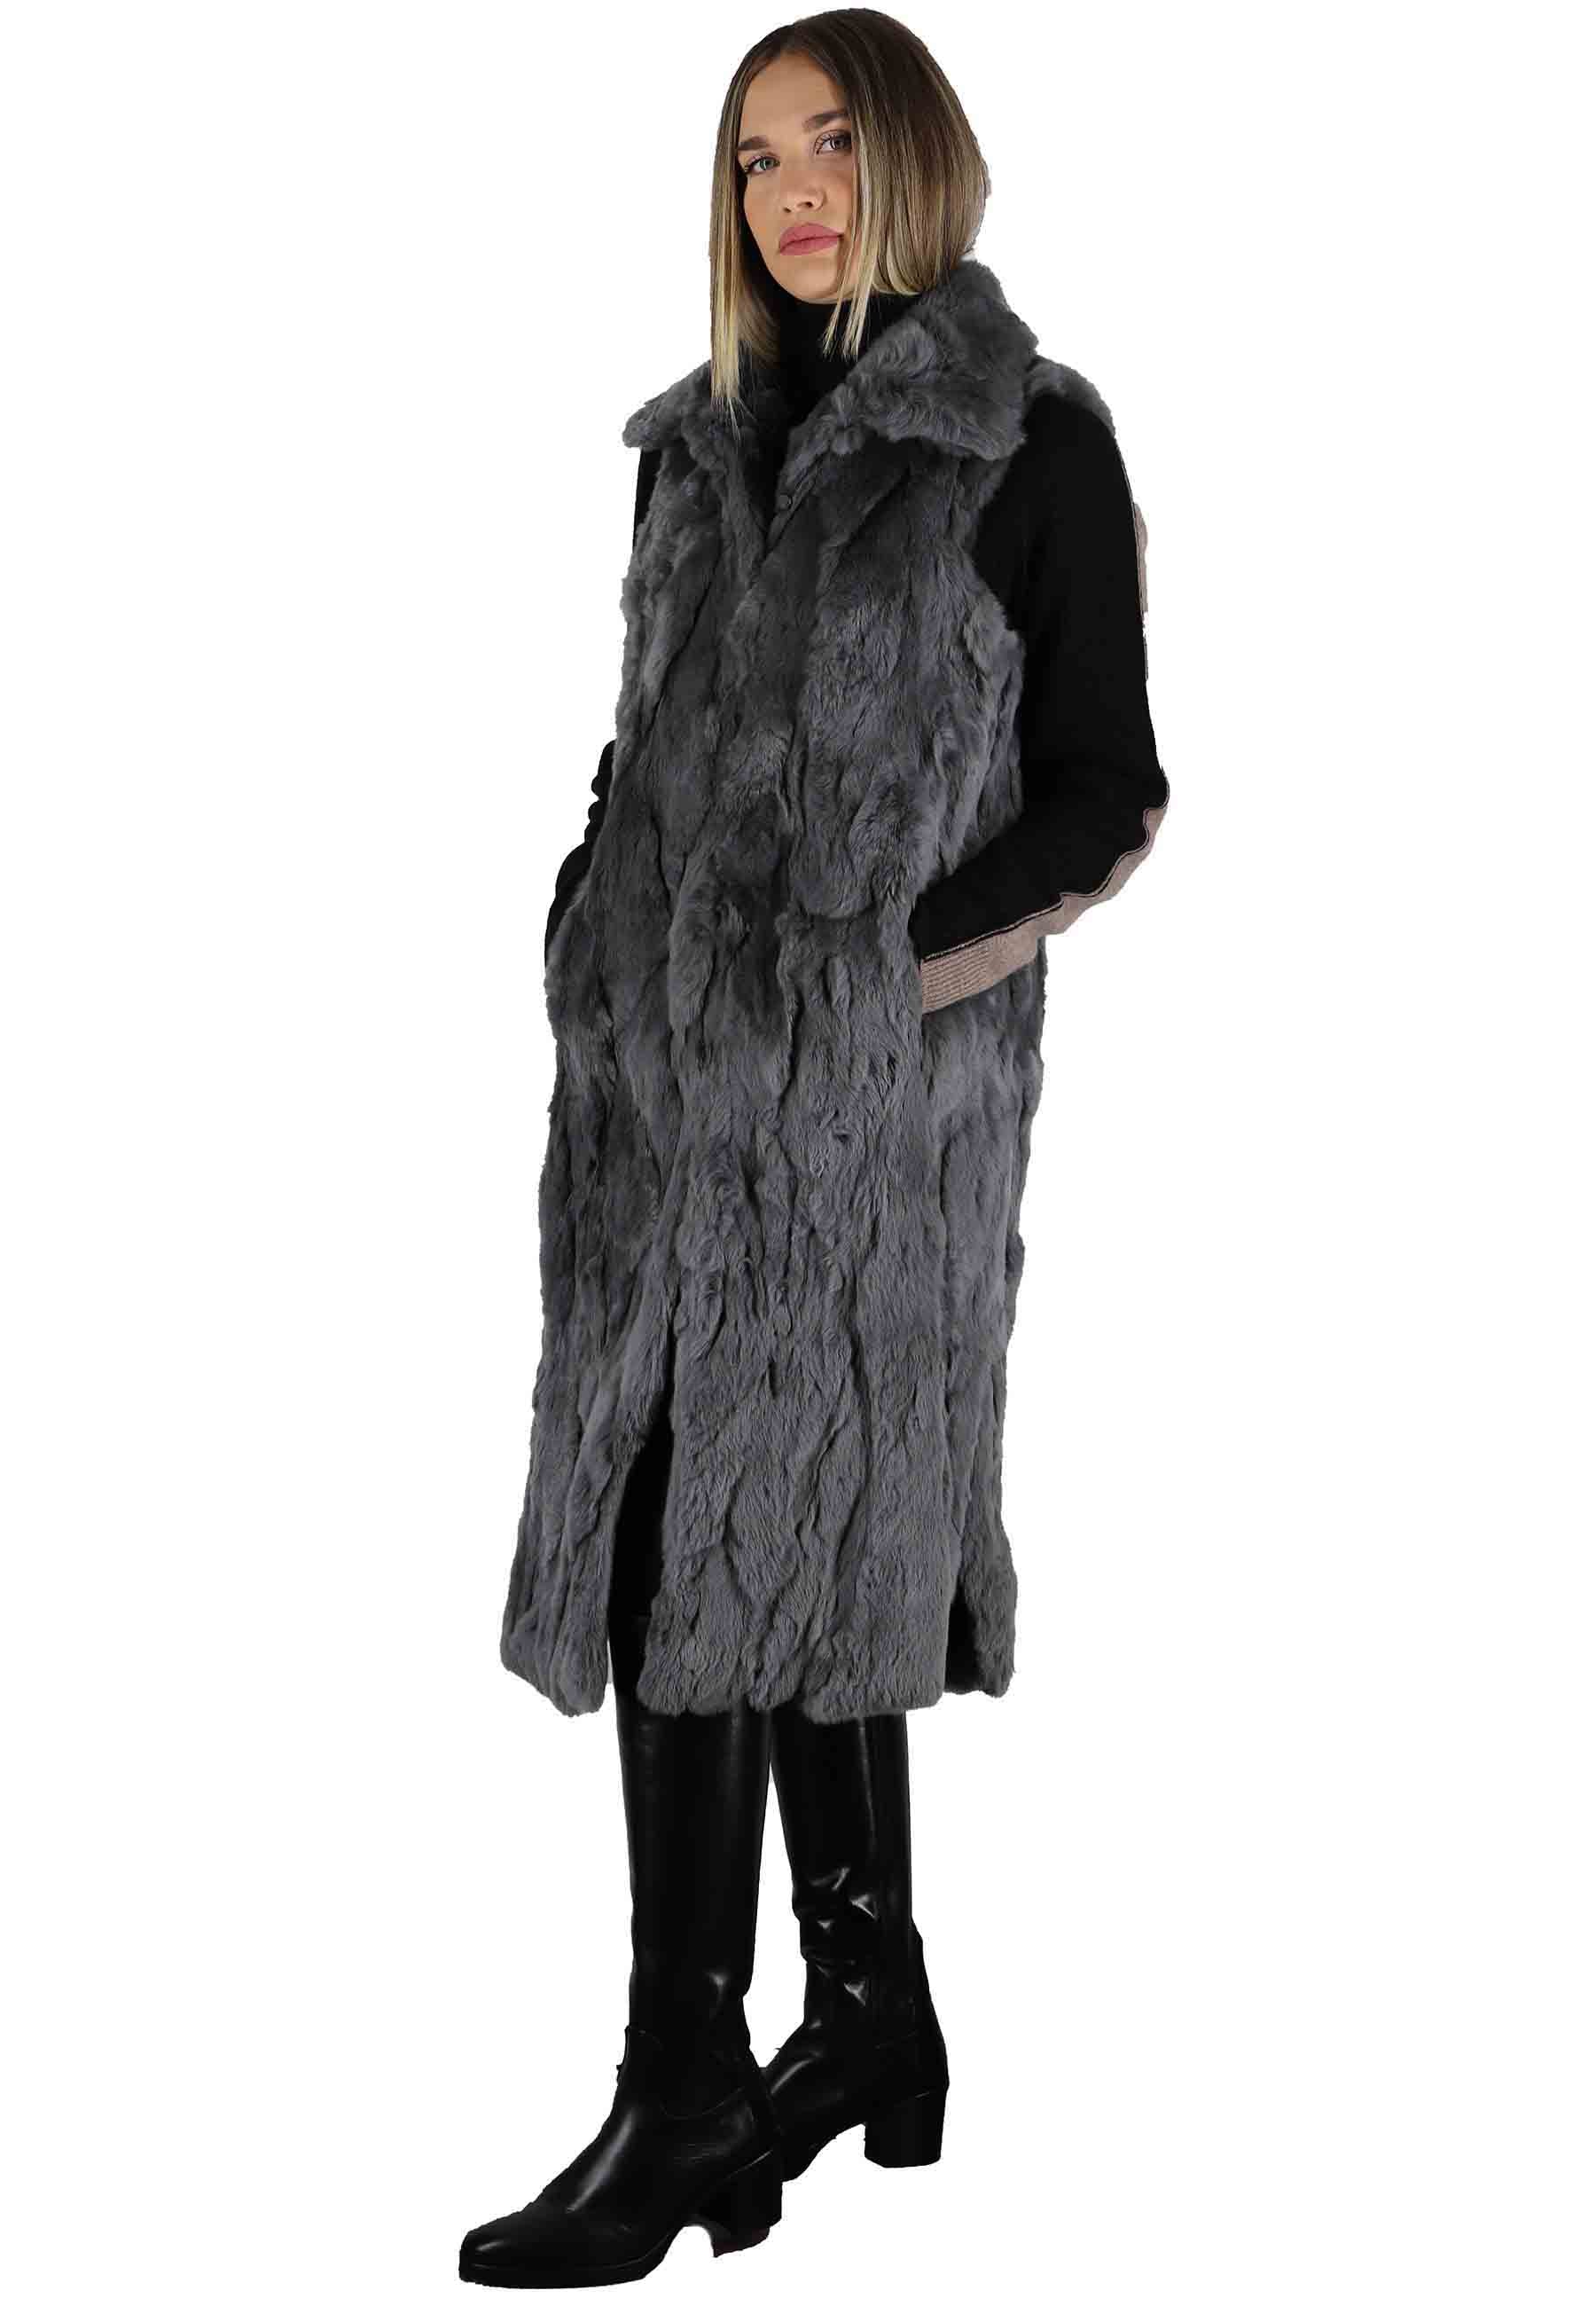 Women's gray rabbit fur coats with armholes and high collar